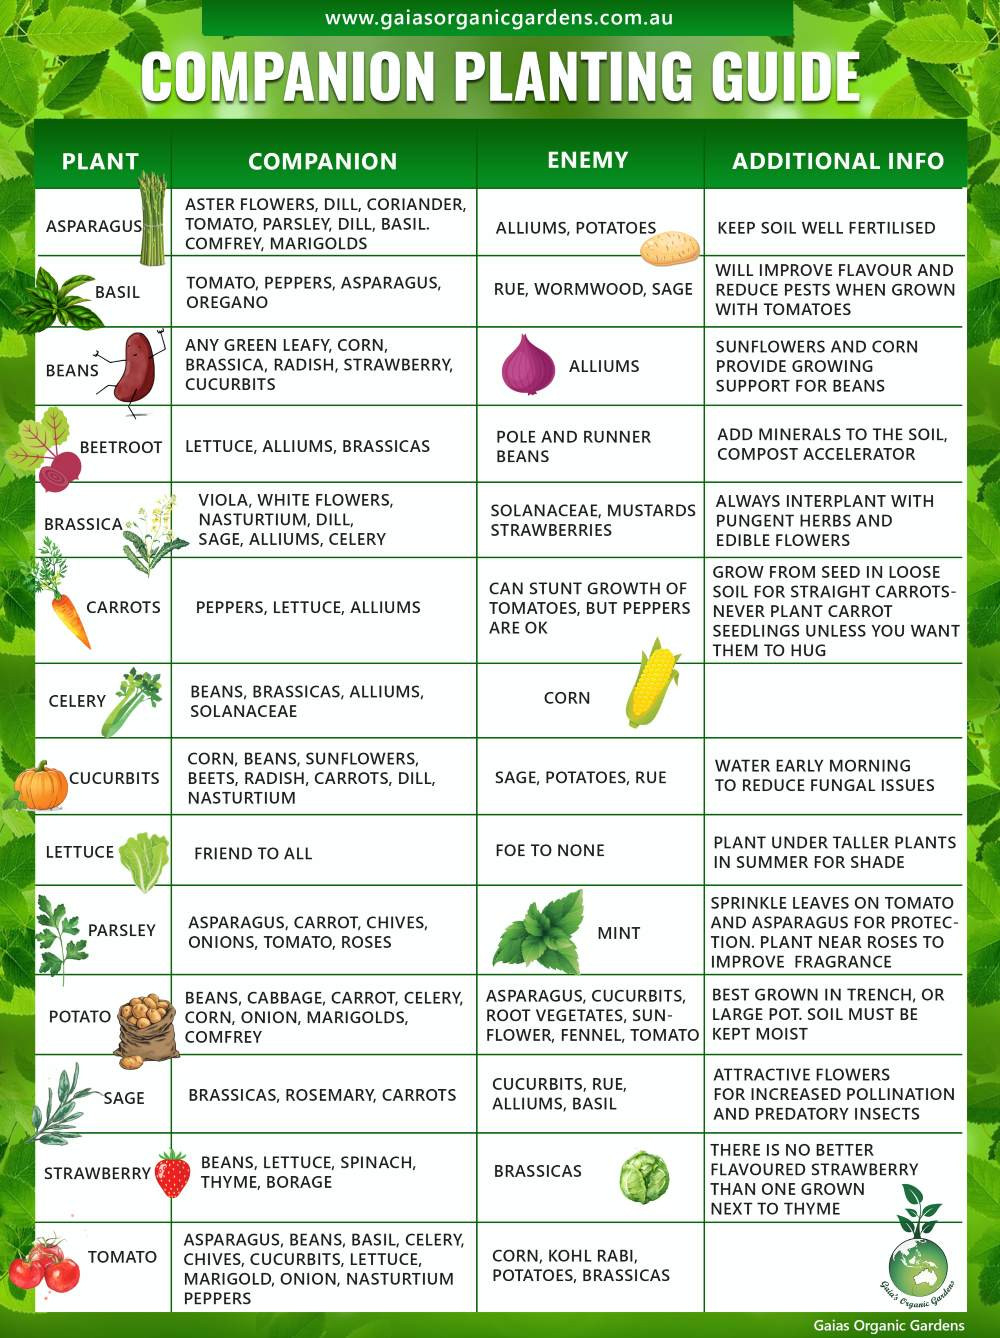 Companion Planting Guide – Gaias Organic Gardens